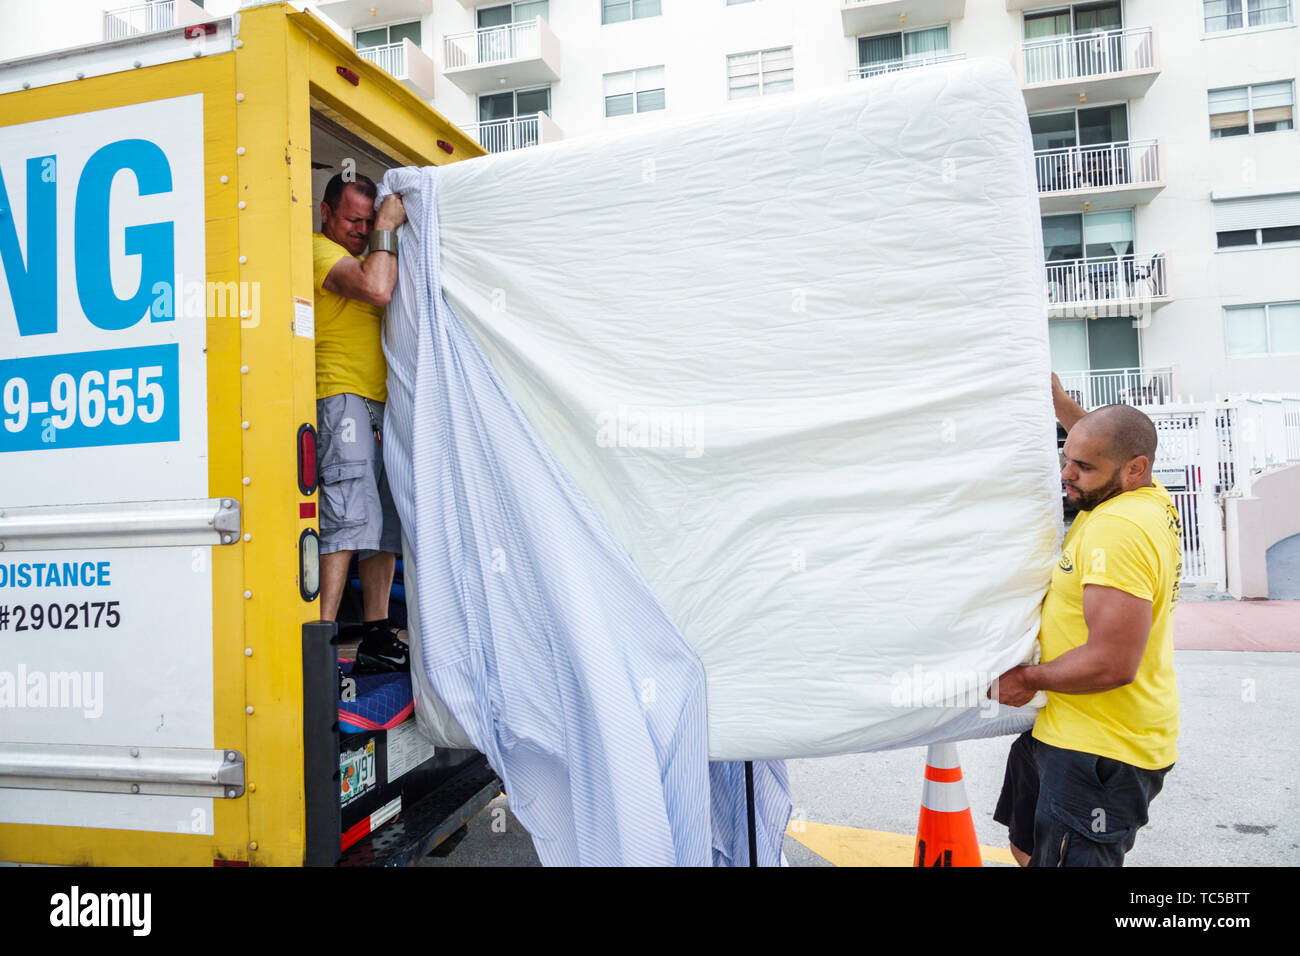 Miami Beach Florida,moving van company,movers,king size mattress,Hispanic man men male,employee working job,teamwork,lifting,loading,FL190228078 Stock Photo